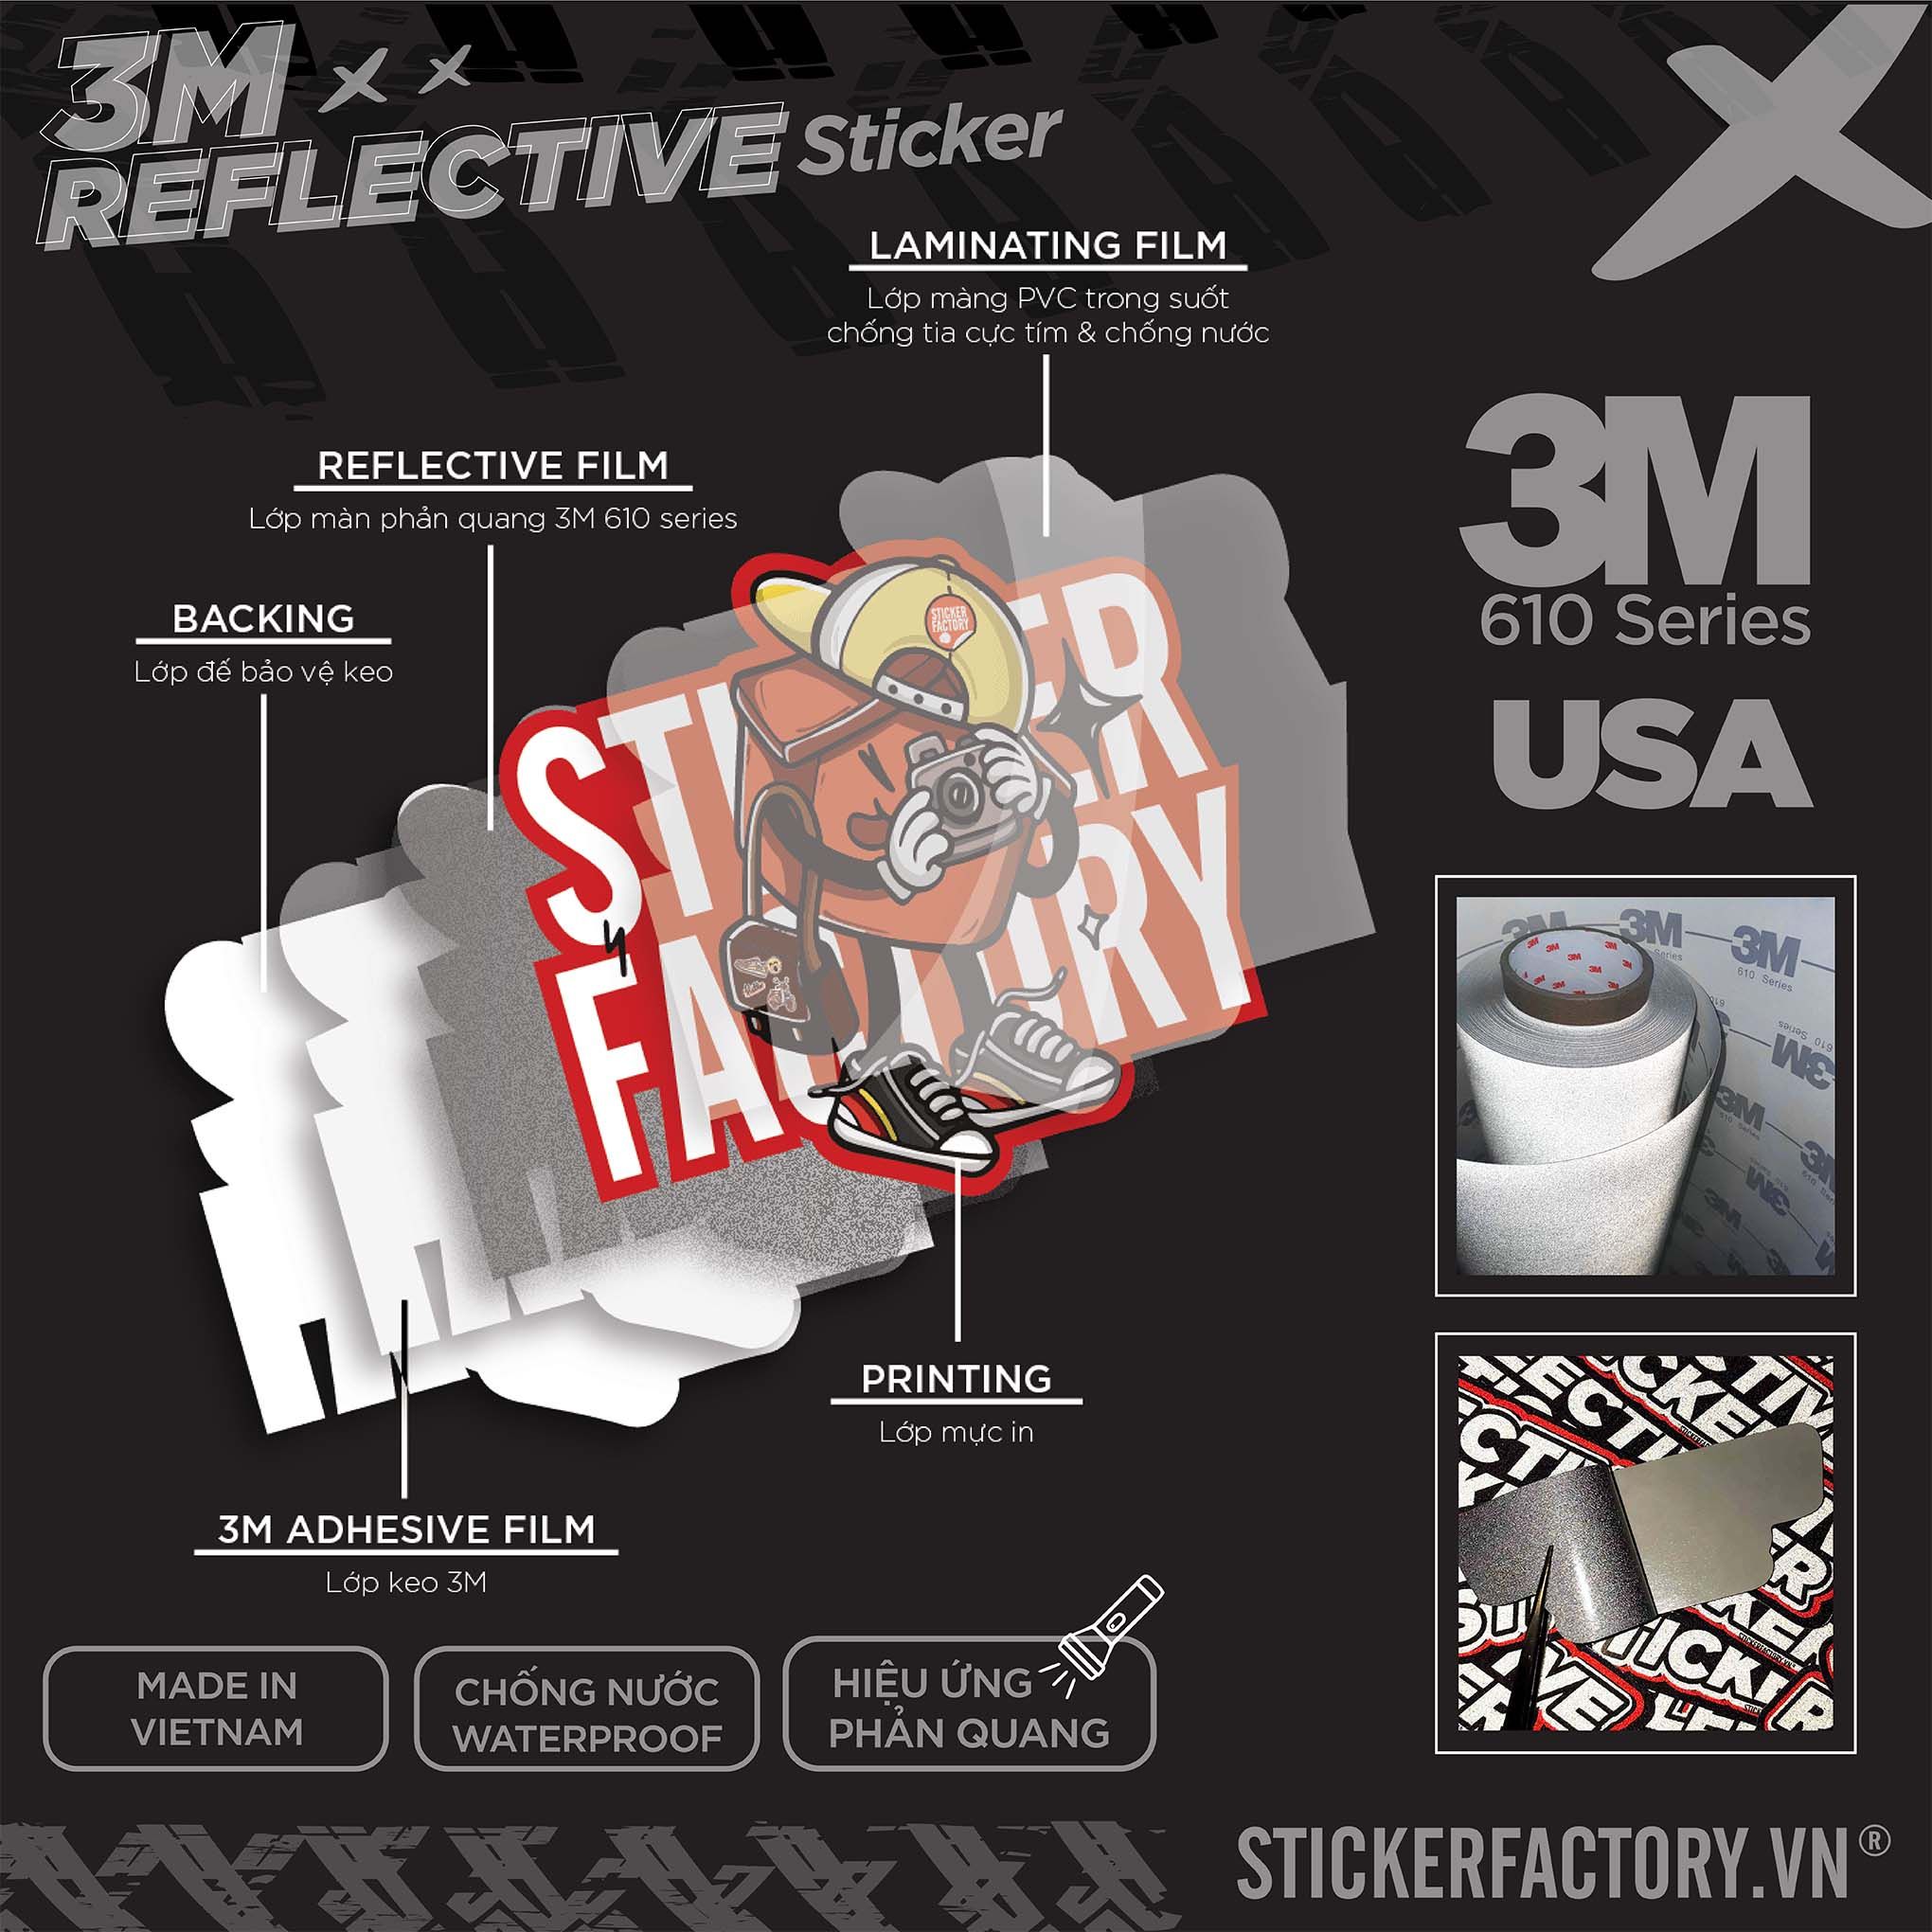 ROLLING STONES 3M - Reflective Sticker Die-cut